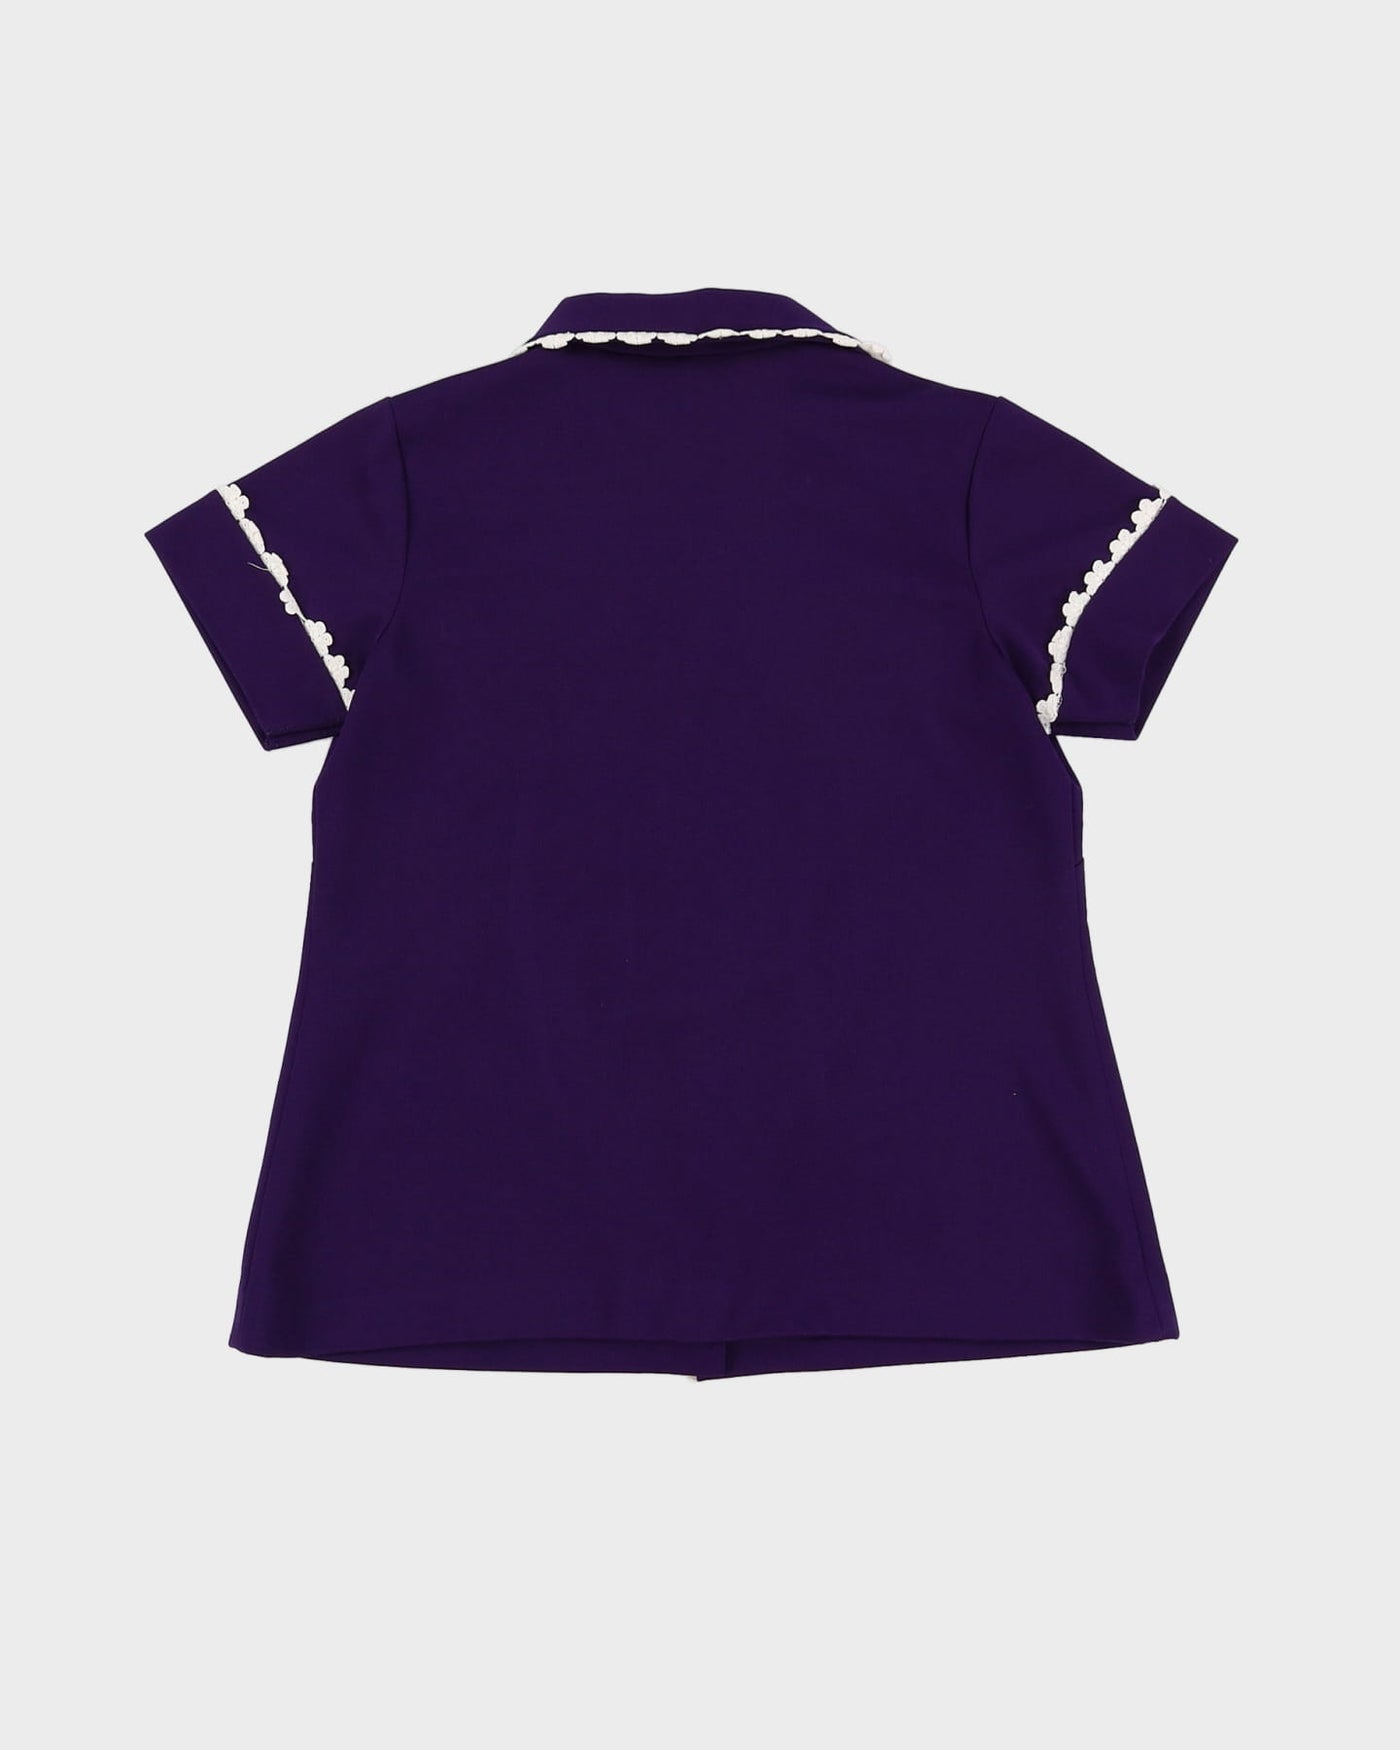 Vintage 1970s Purple Short Sleeve Top - M